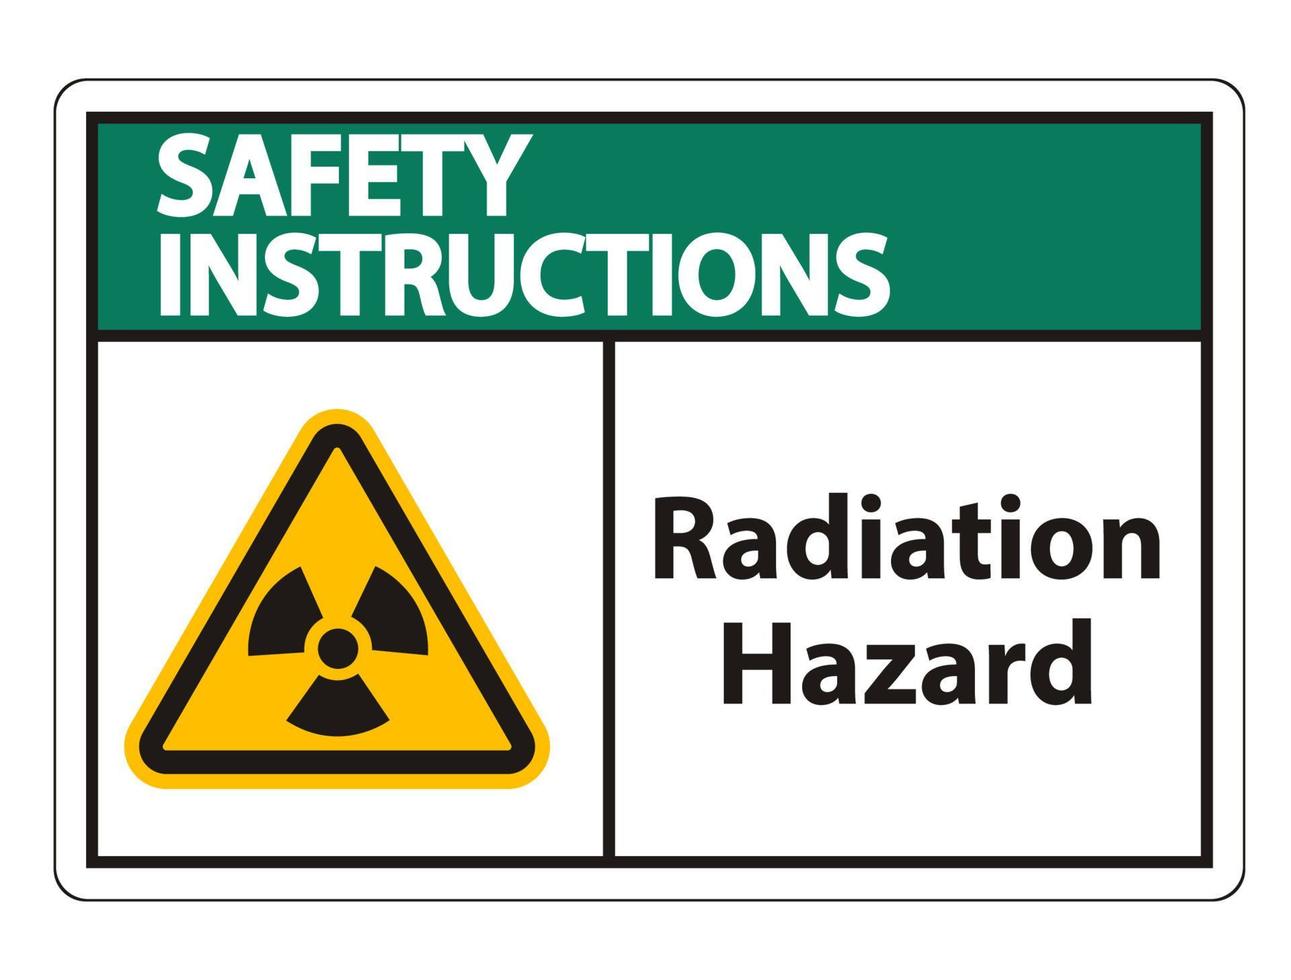 Radiation Hazard Symbol Sign Isolate On White Background,Vector Illustration vector